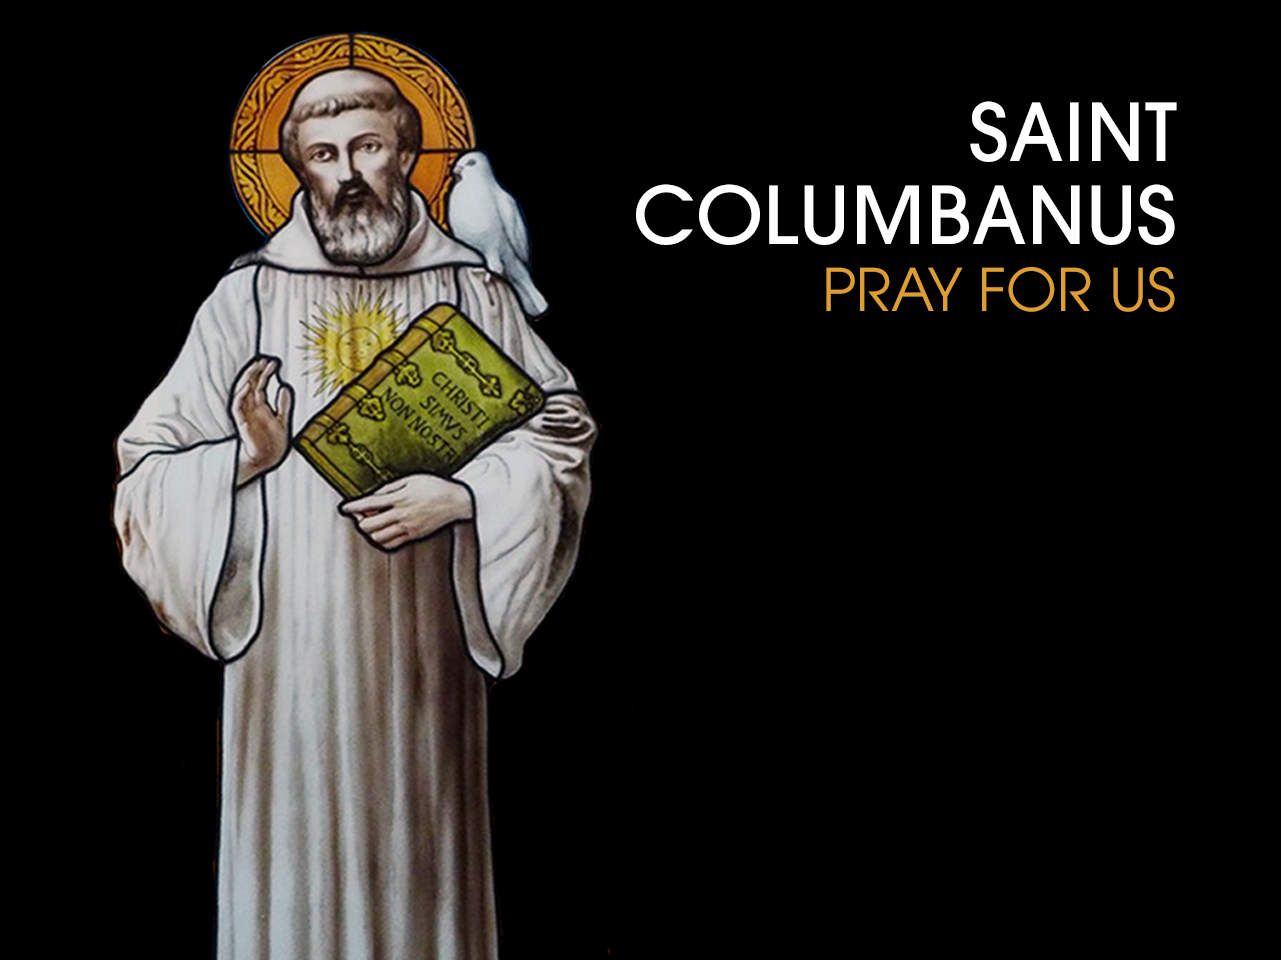 St. Columbanus